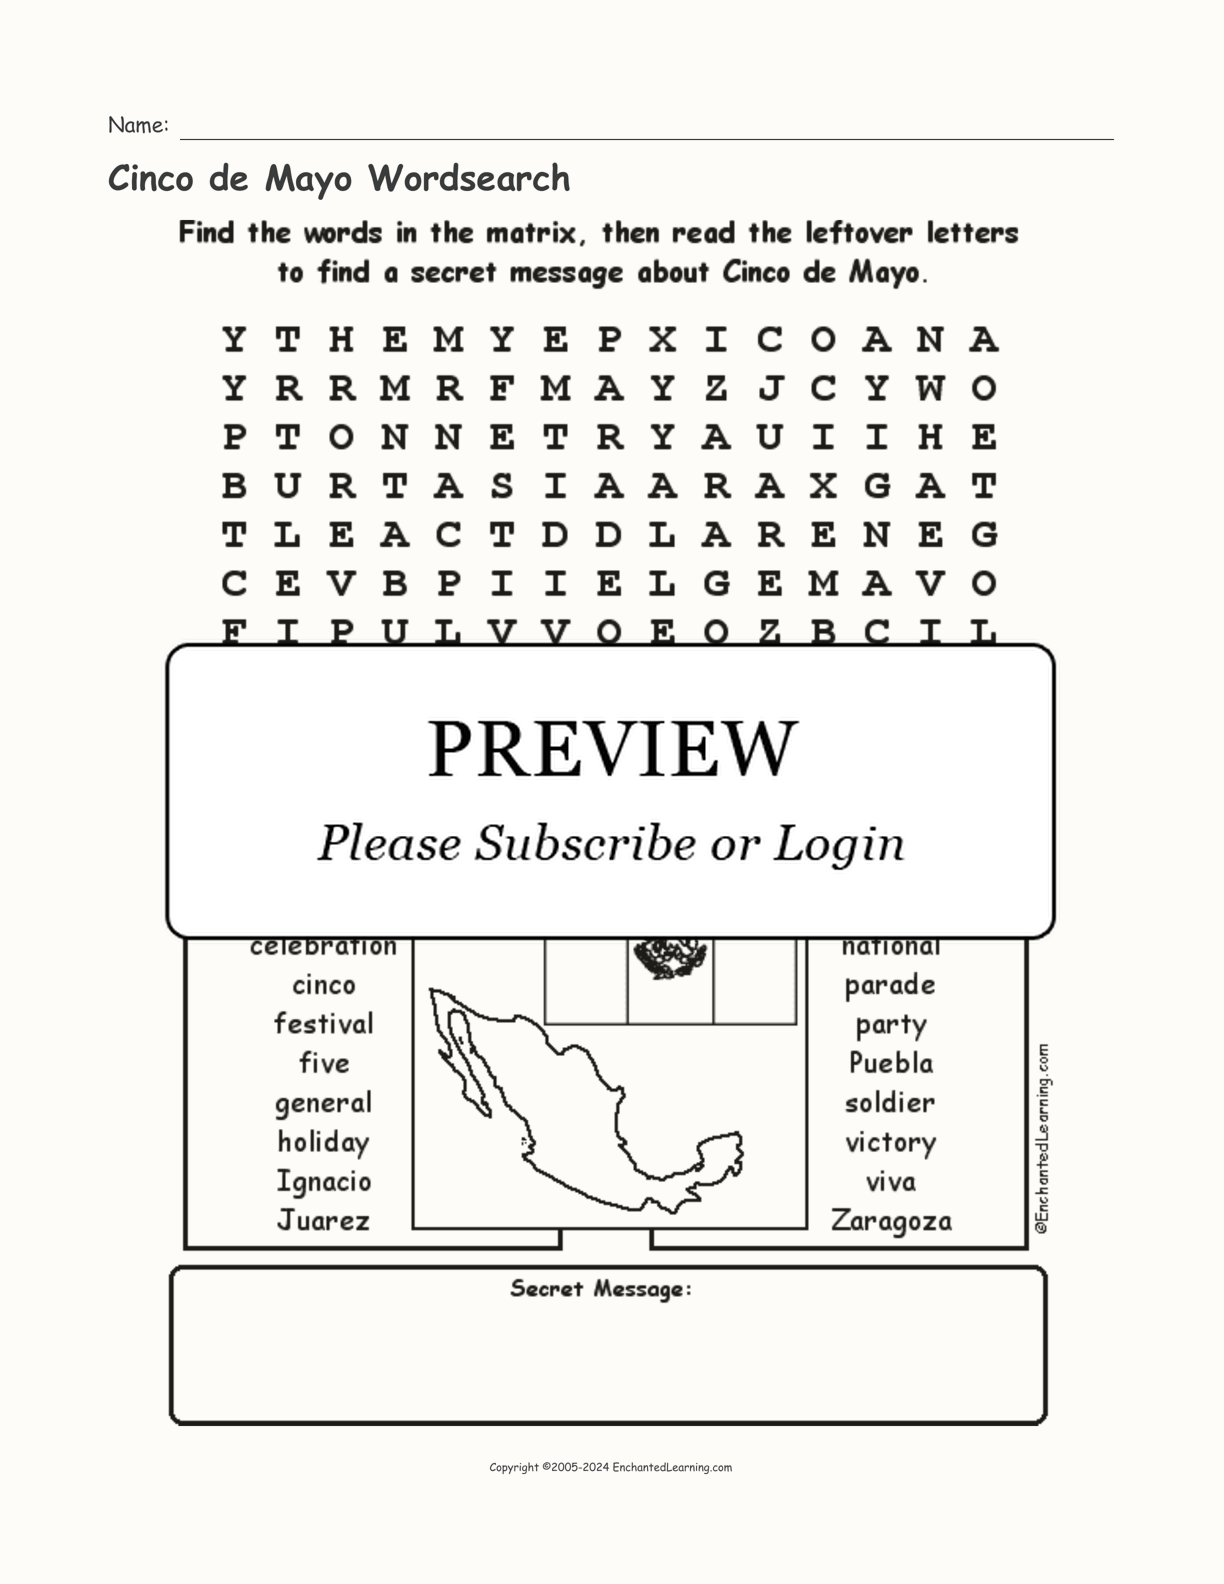 Cinco de Mayo Wordsearch interactive worksheet page 1